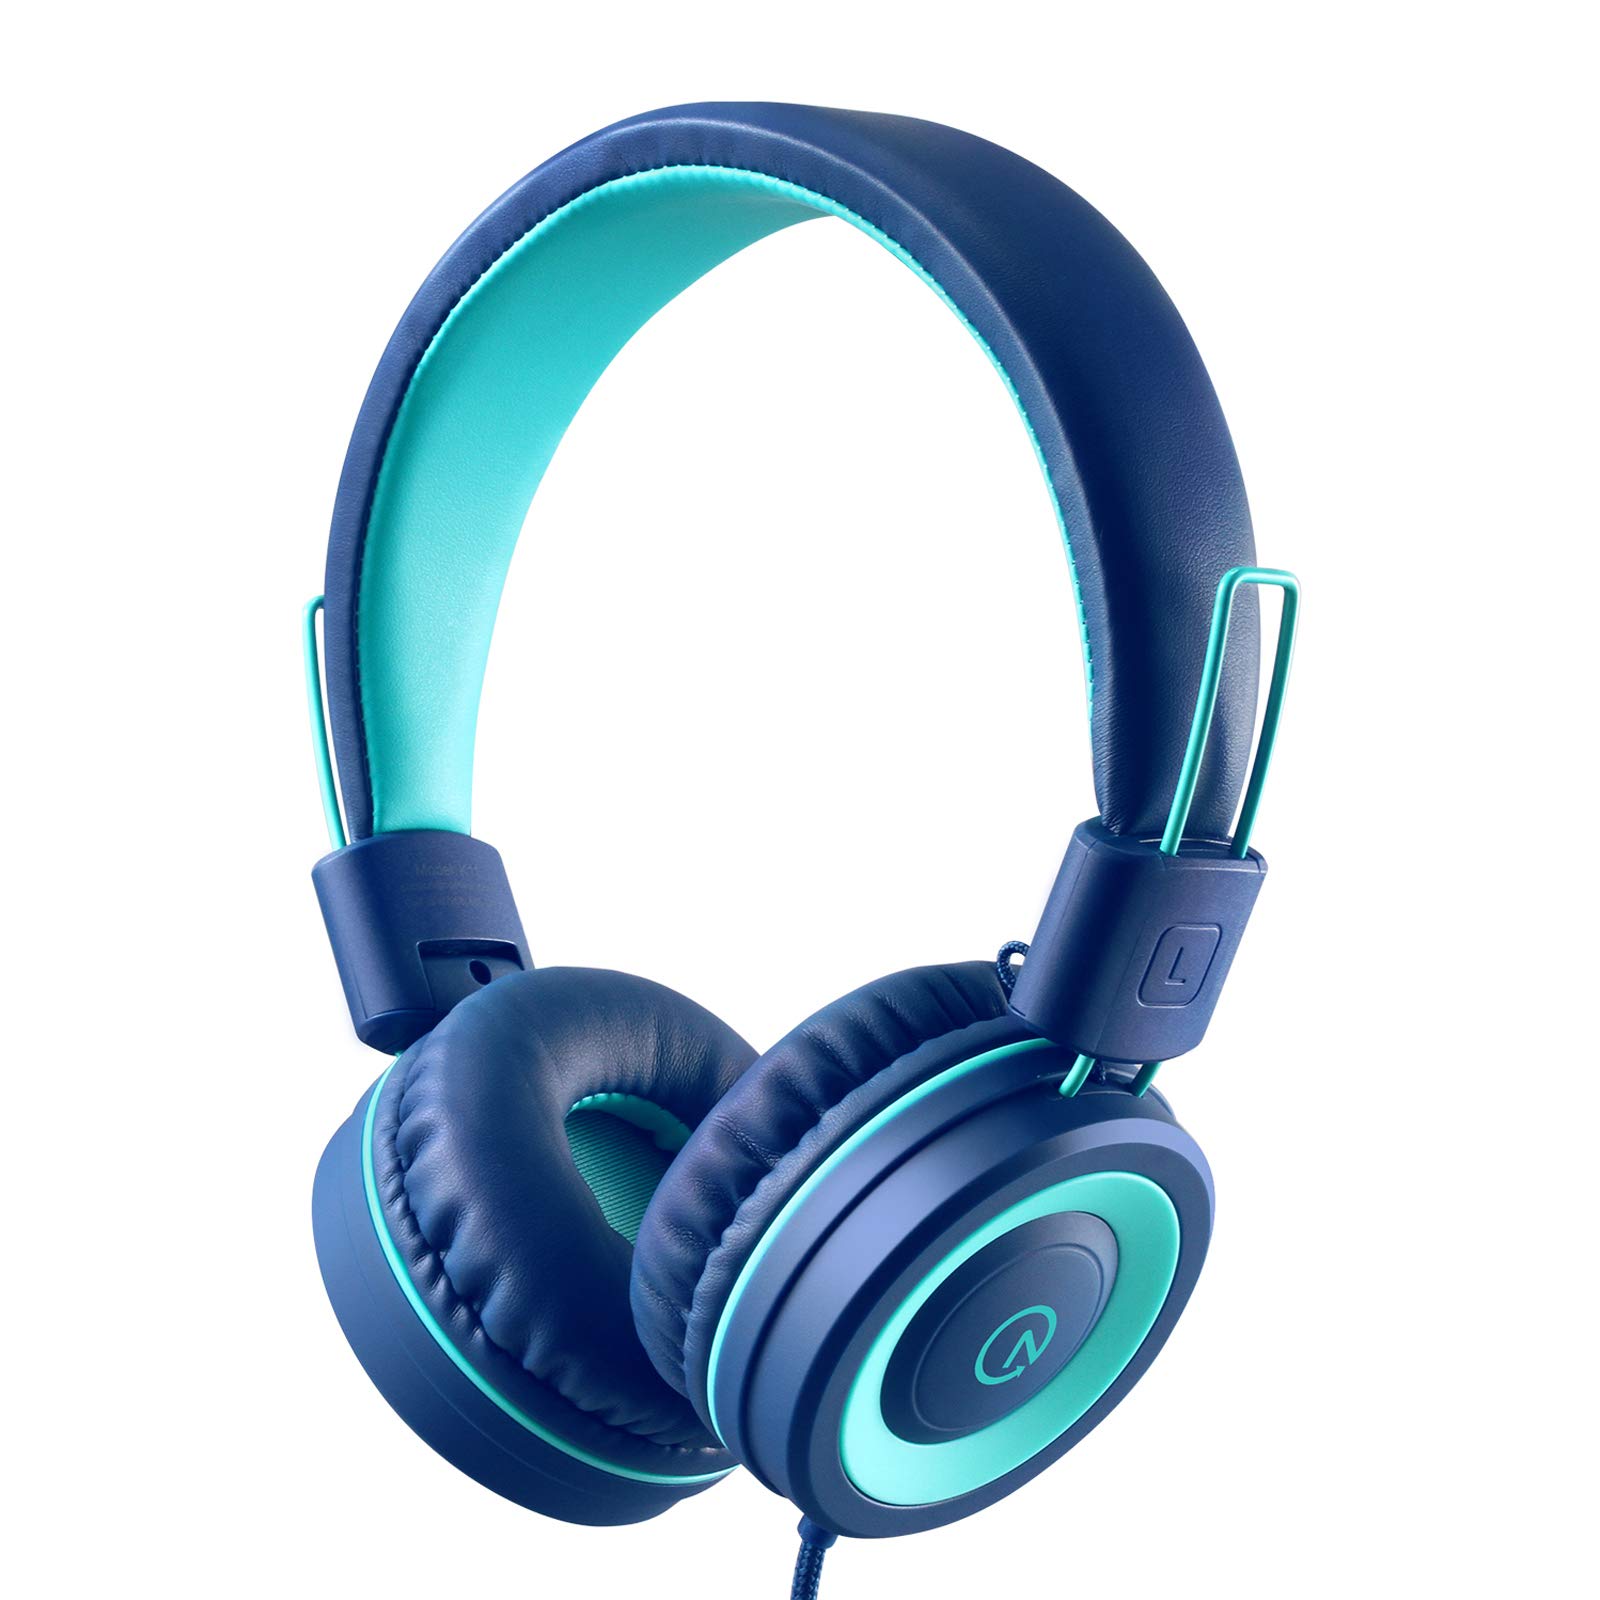  noot products سماعات رأس للأطفال - K11 ستريو قابل للطي وخالي من التشابك 3.5 ملم جاك سلكي على الأذن للأطفال / المراهقين /...